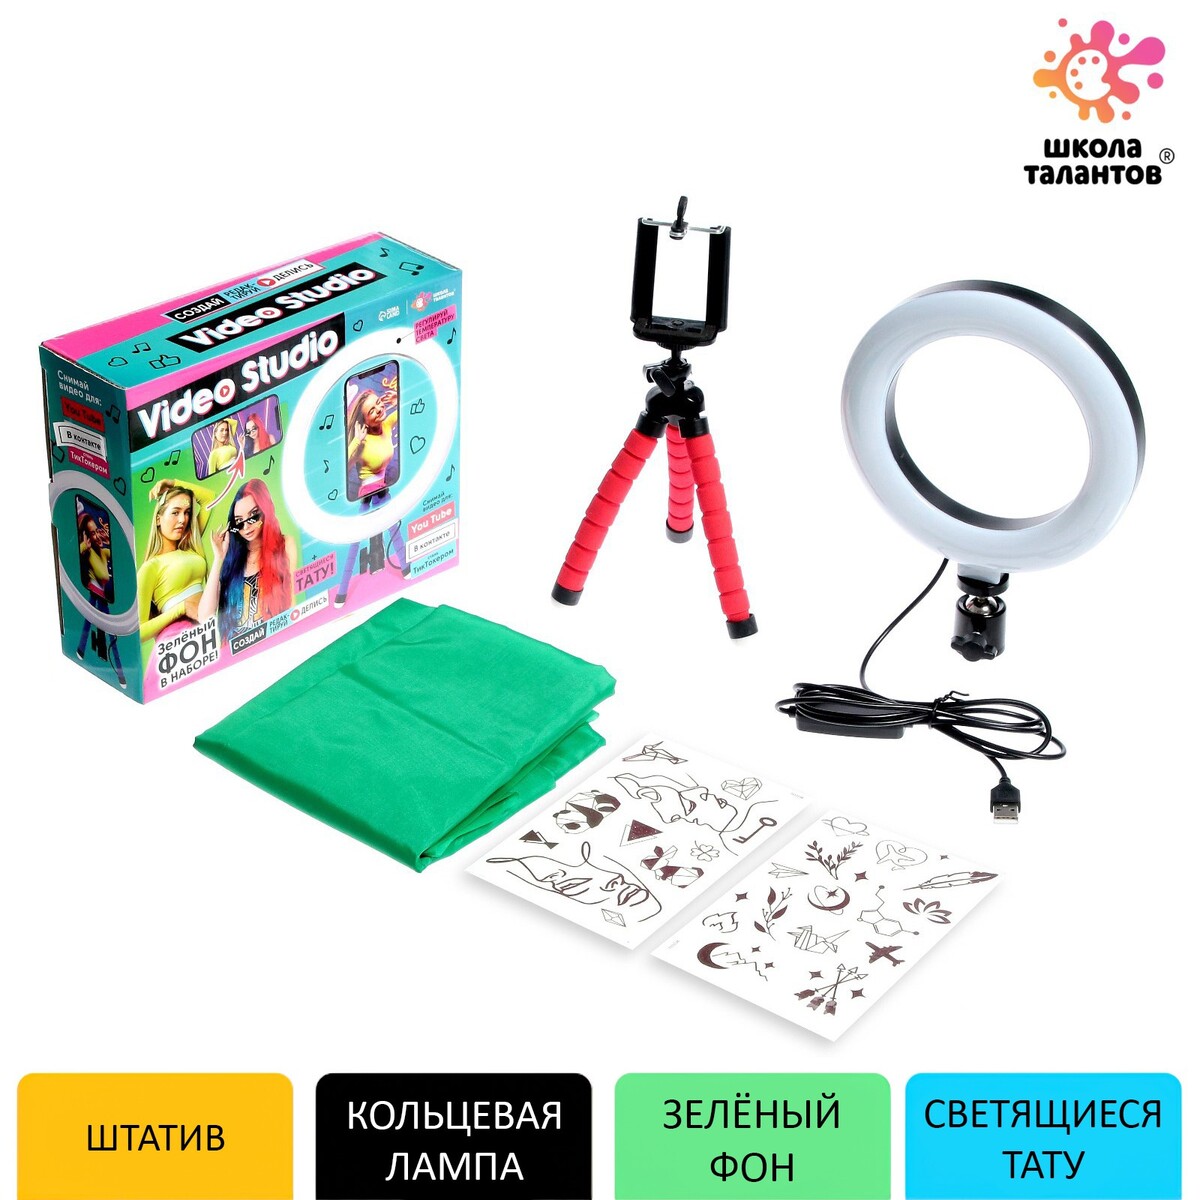 Кольцевая лампа, набор для съемок видео развивающая игрушка ути пути набор ярких мячиков сенсорики 6 шт